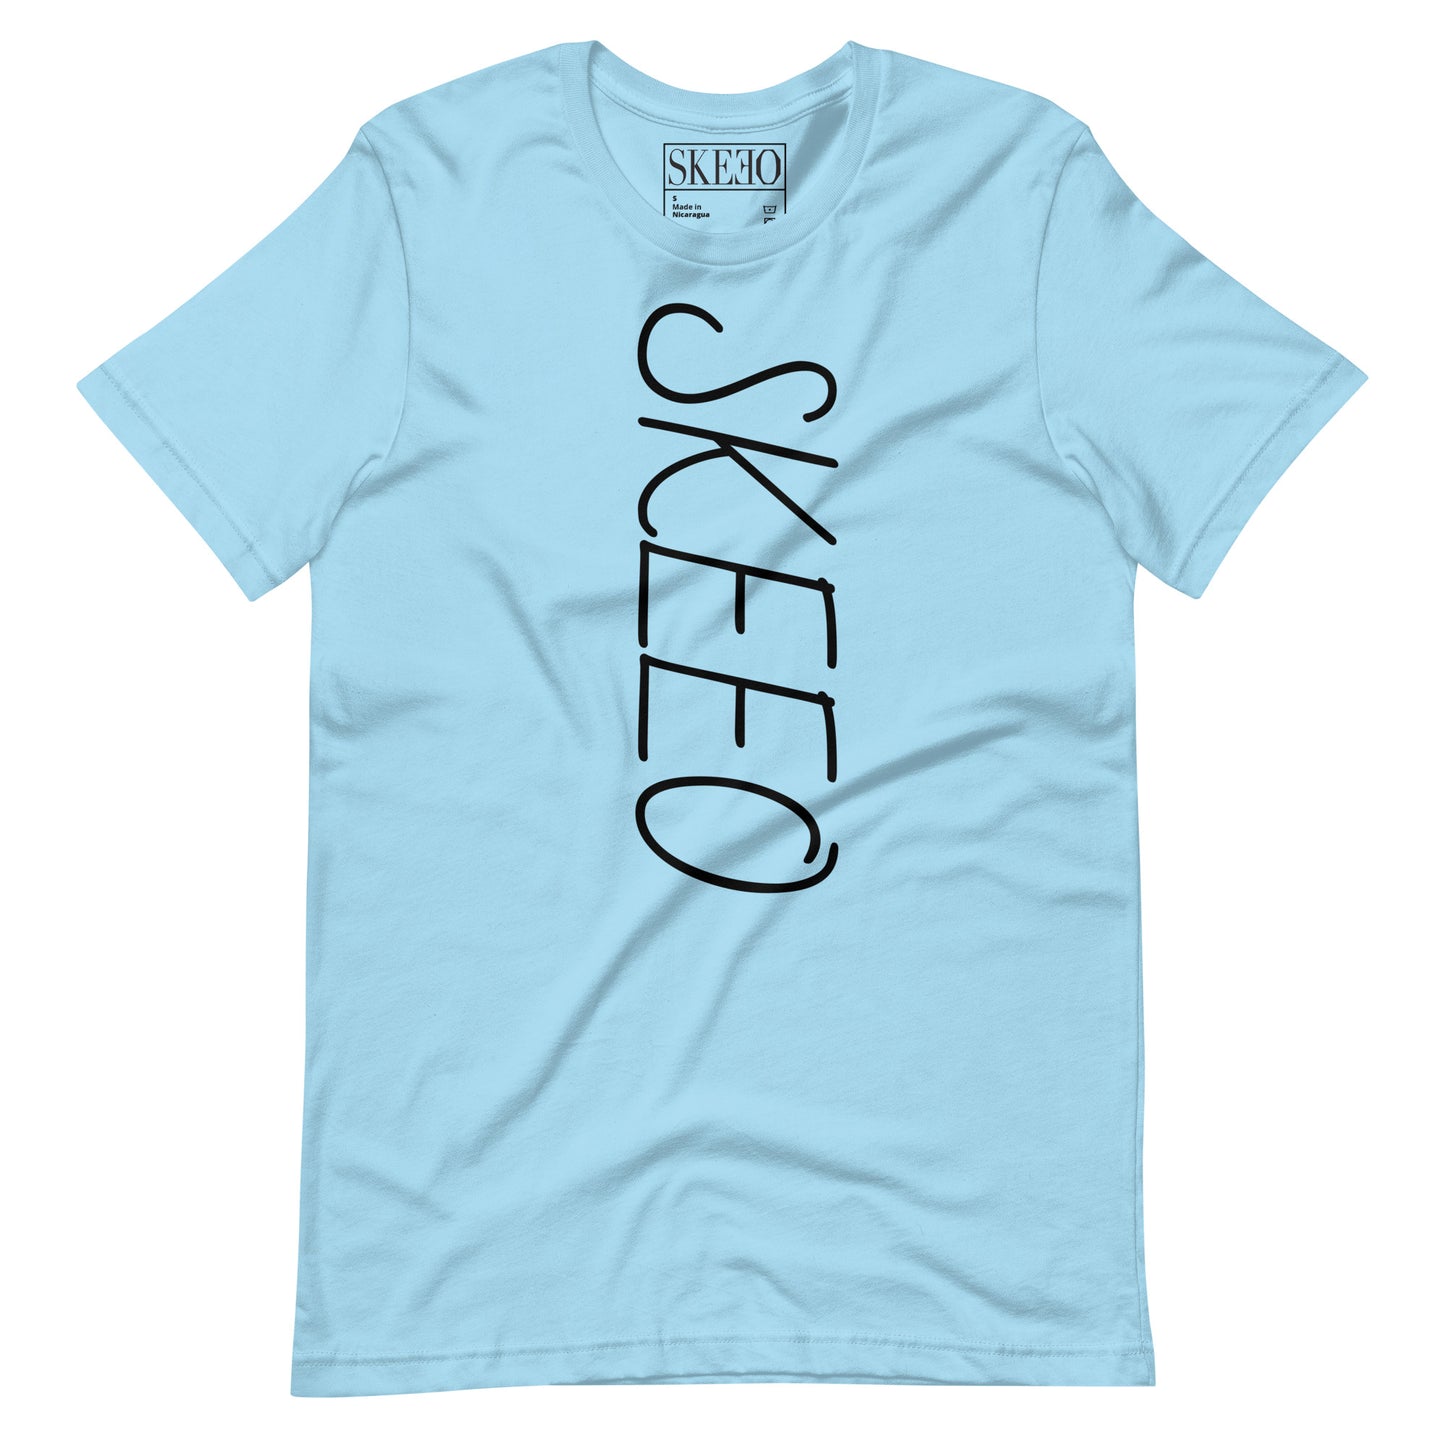 A A SK Skeeo t-shirt